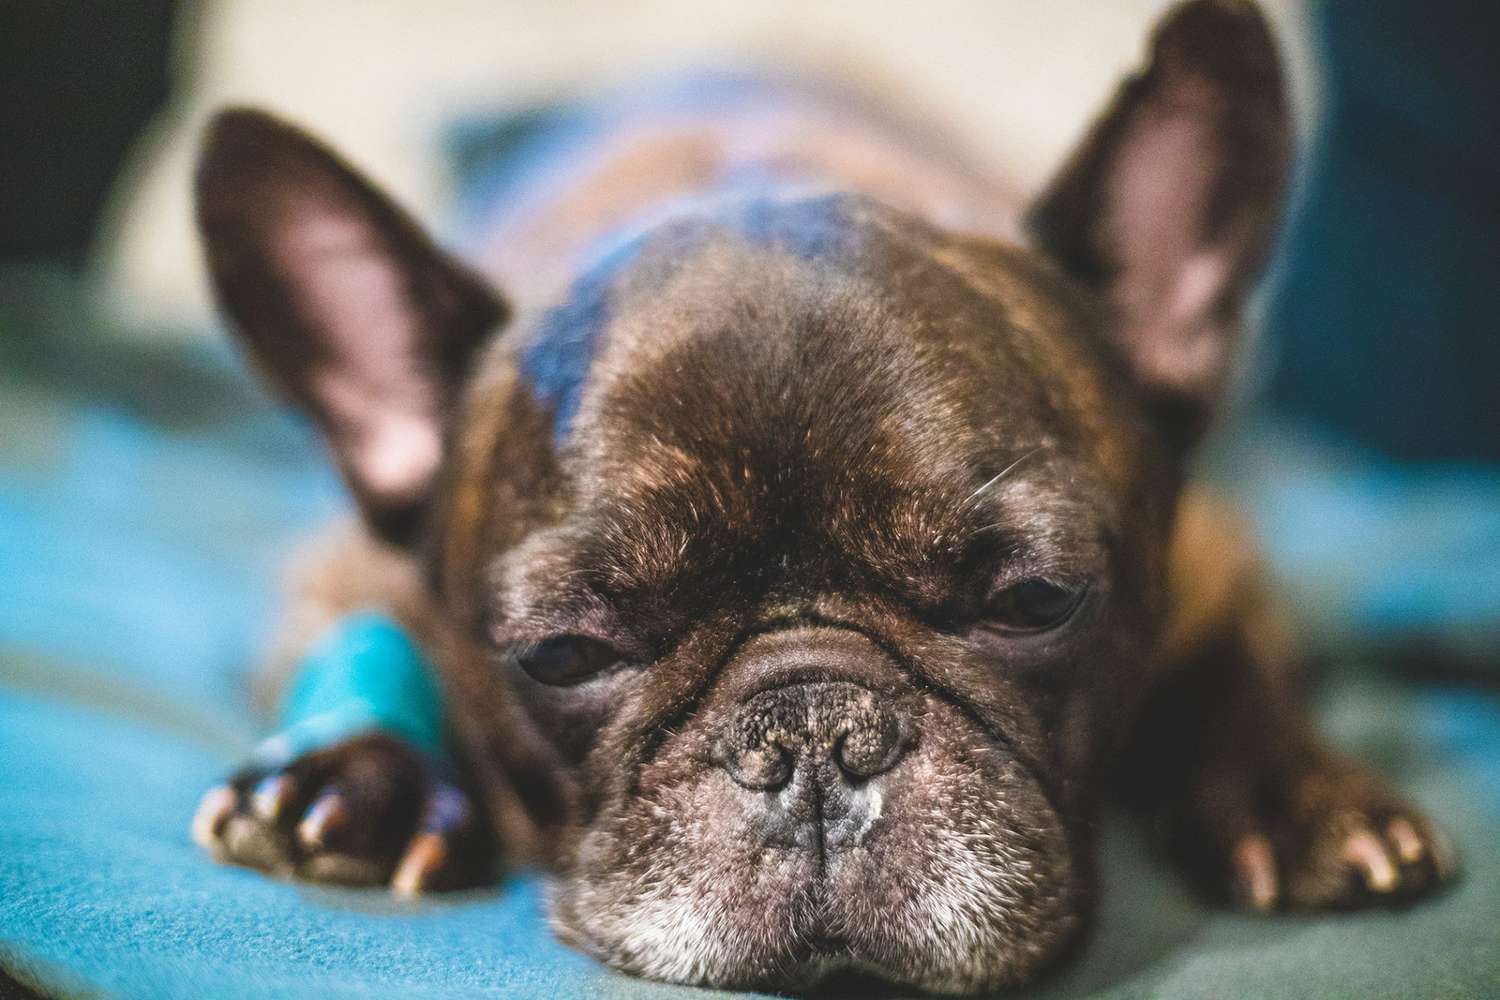 Sad chocolate French Bulldog with bandage on arm lays on teal blanket